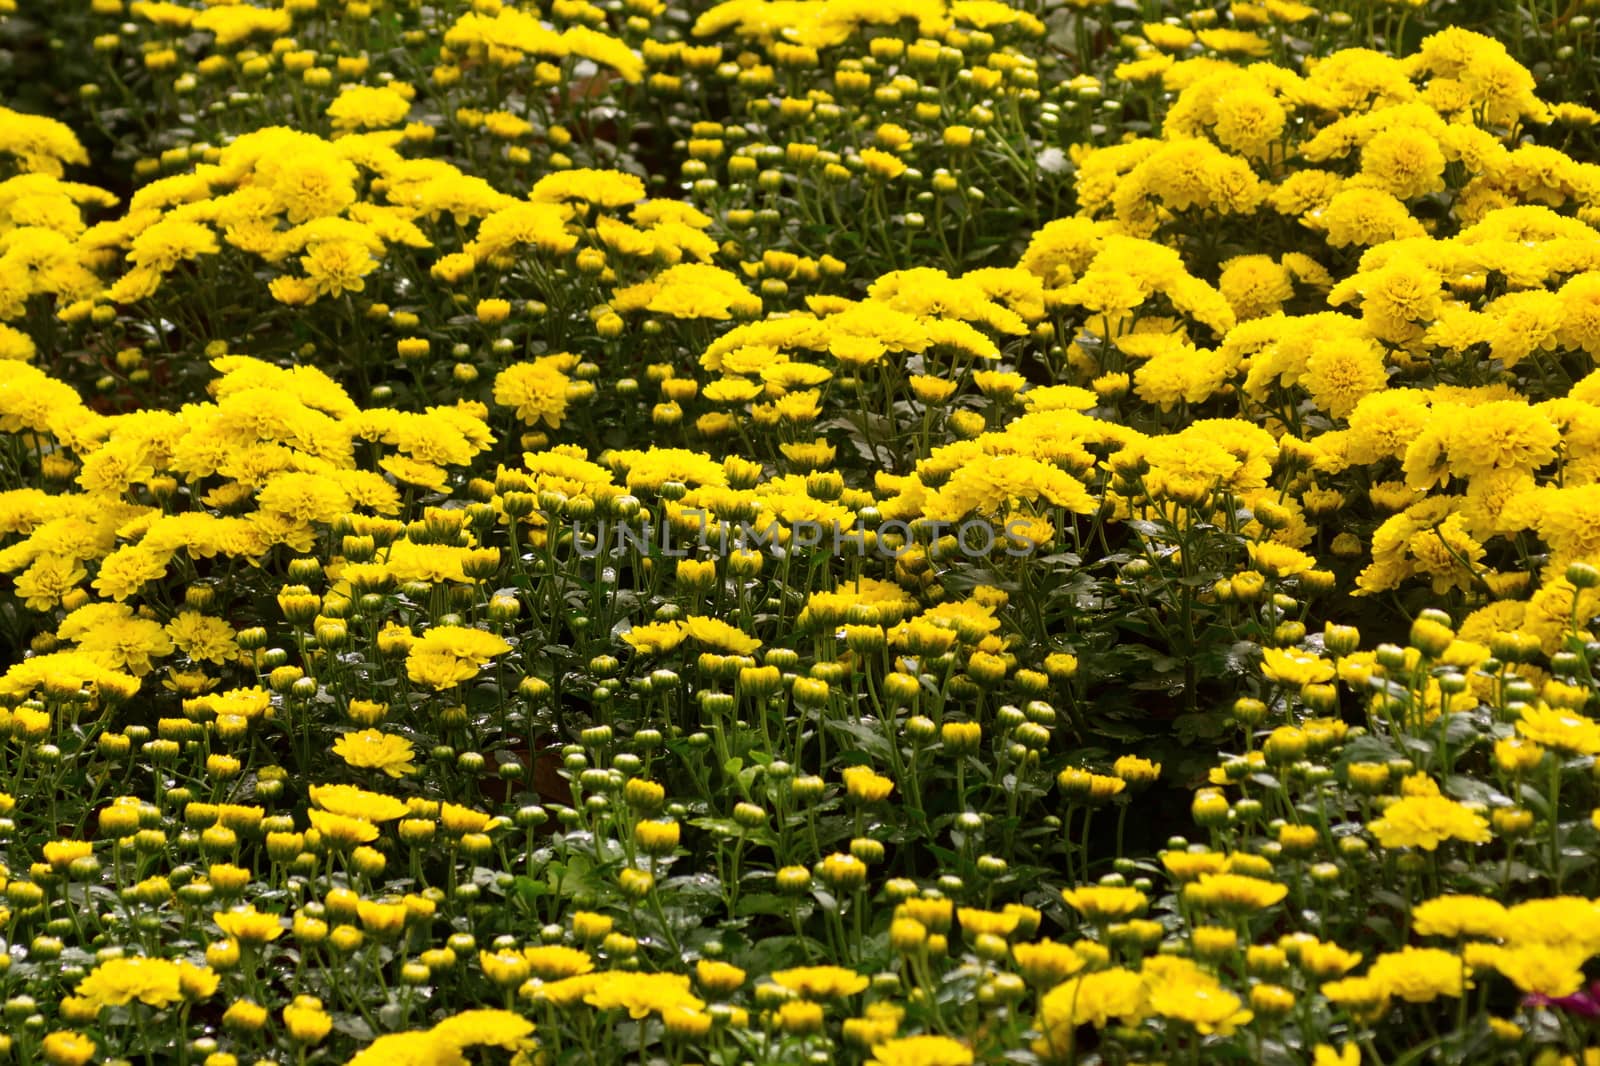 Yellow Chrysanthemum flower bankground